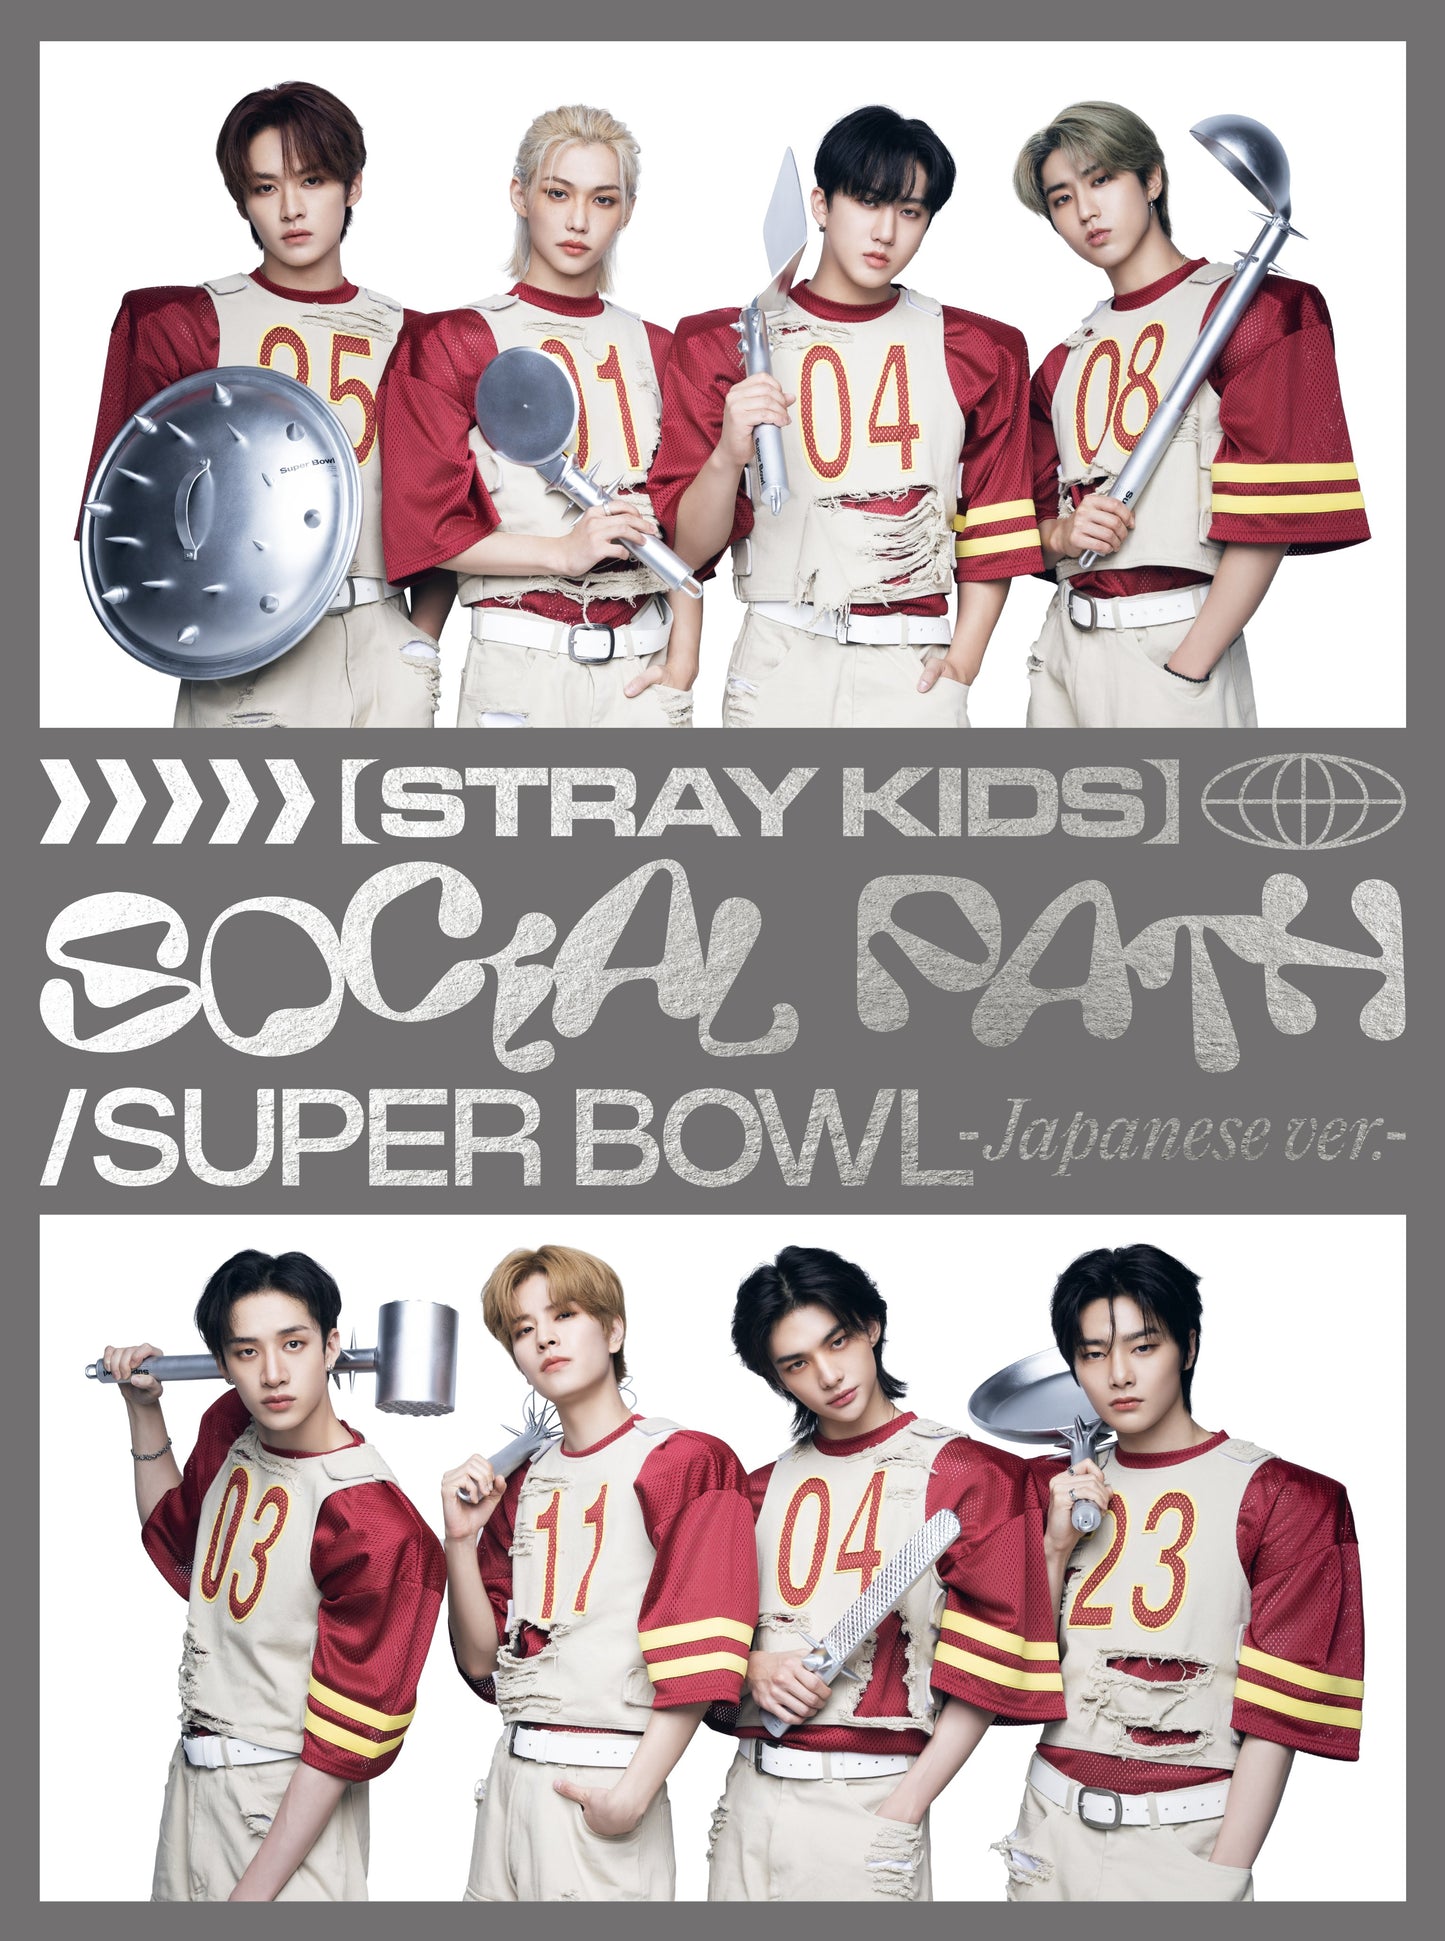 [Japanese Edition] Stray Kids Japan 1st EP Album "SOCIAL PATH" - (Standard)